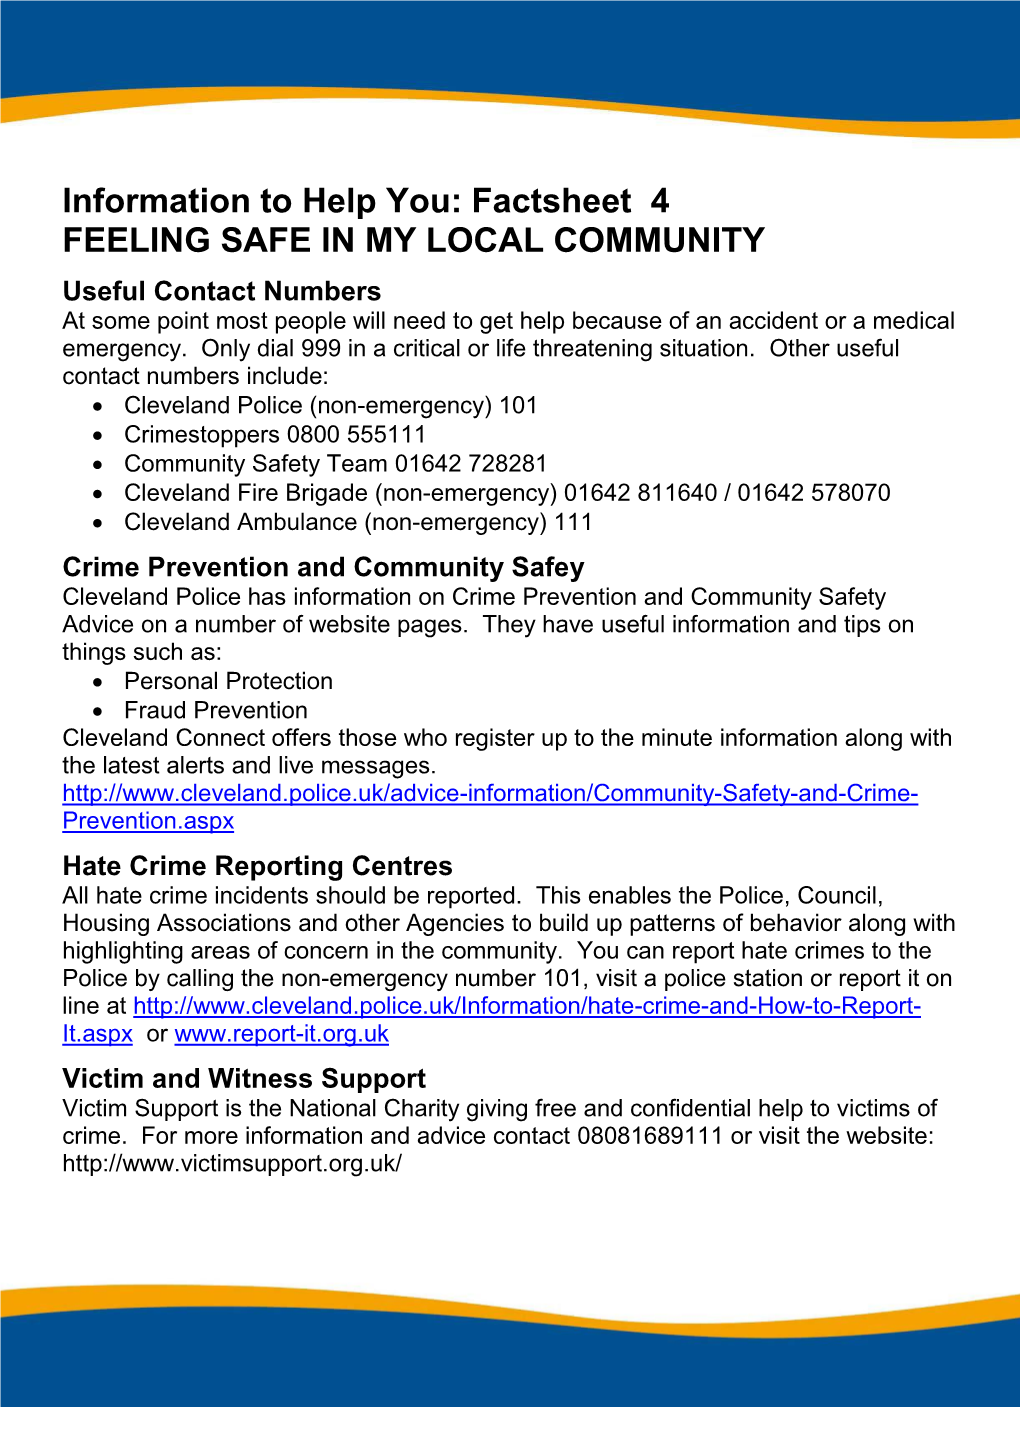 Factsheet 4 – Feeling Safe in My Local Community